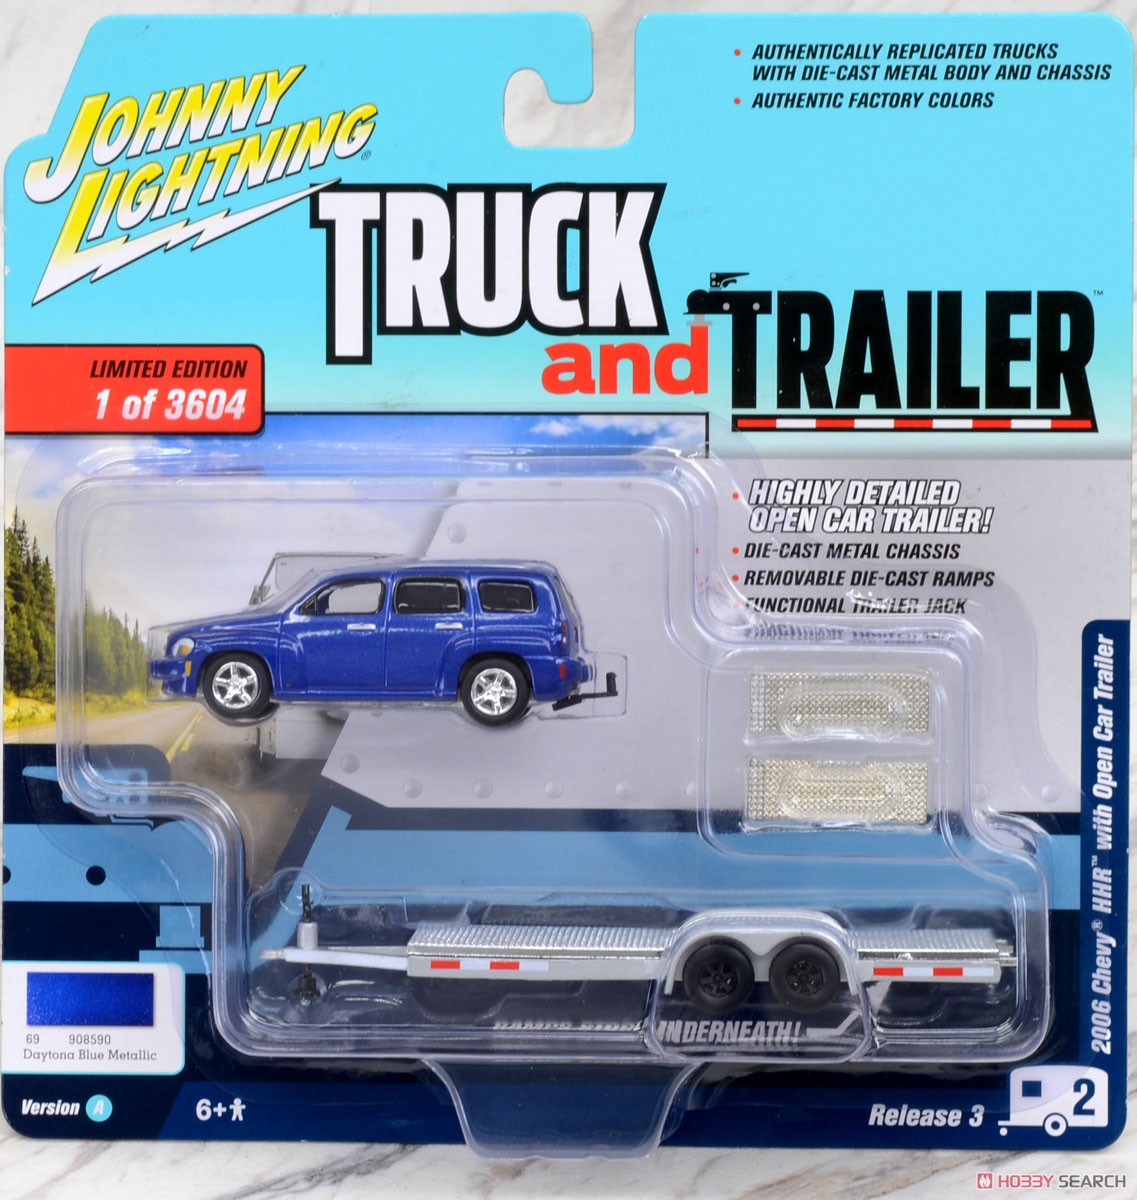 Truck and Trailer 2006 Chevy HHR with Open Car Trailer Daytona Blue Metallic (ミニカー) パッケージ1